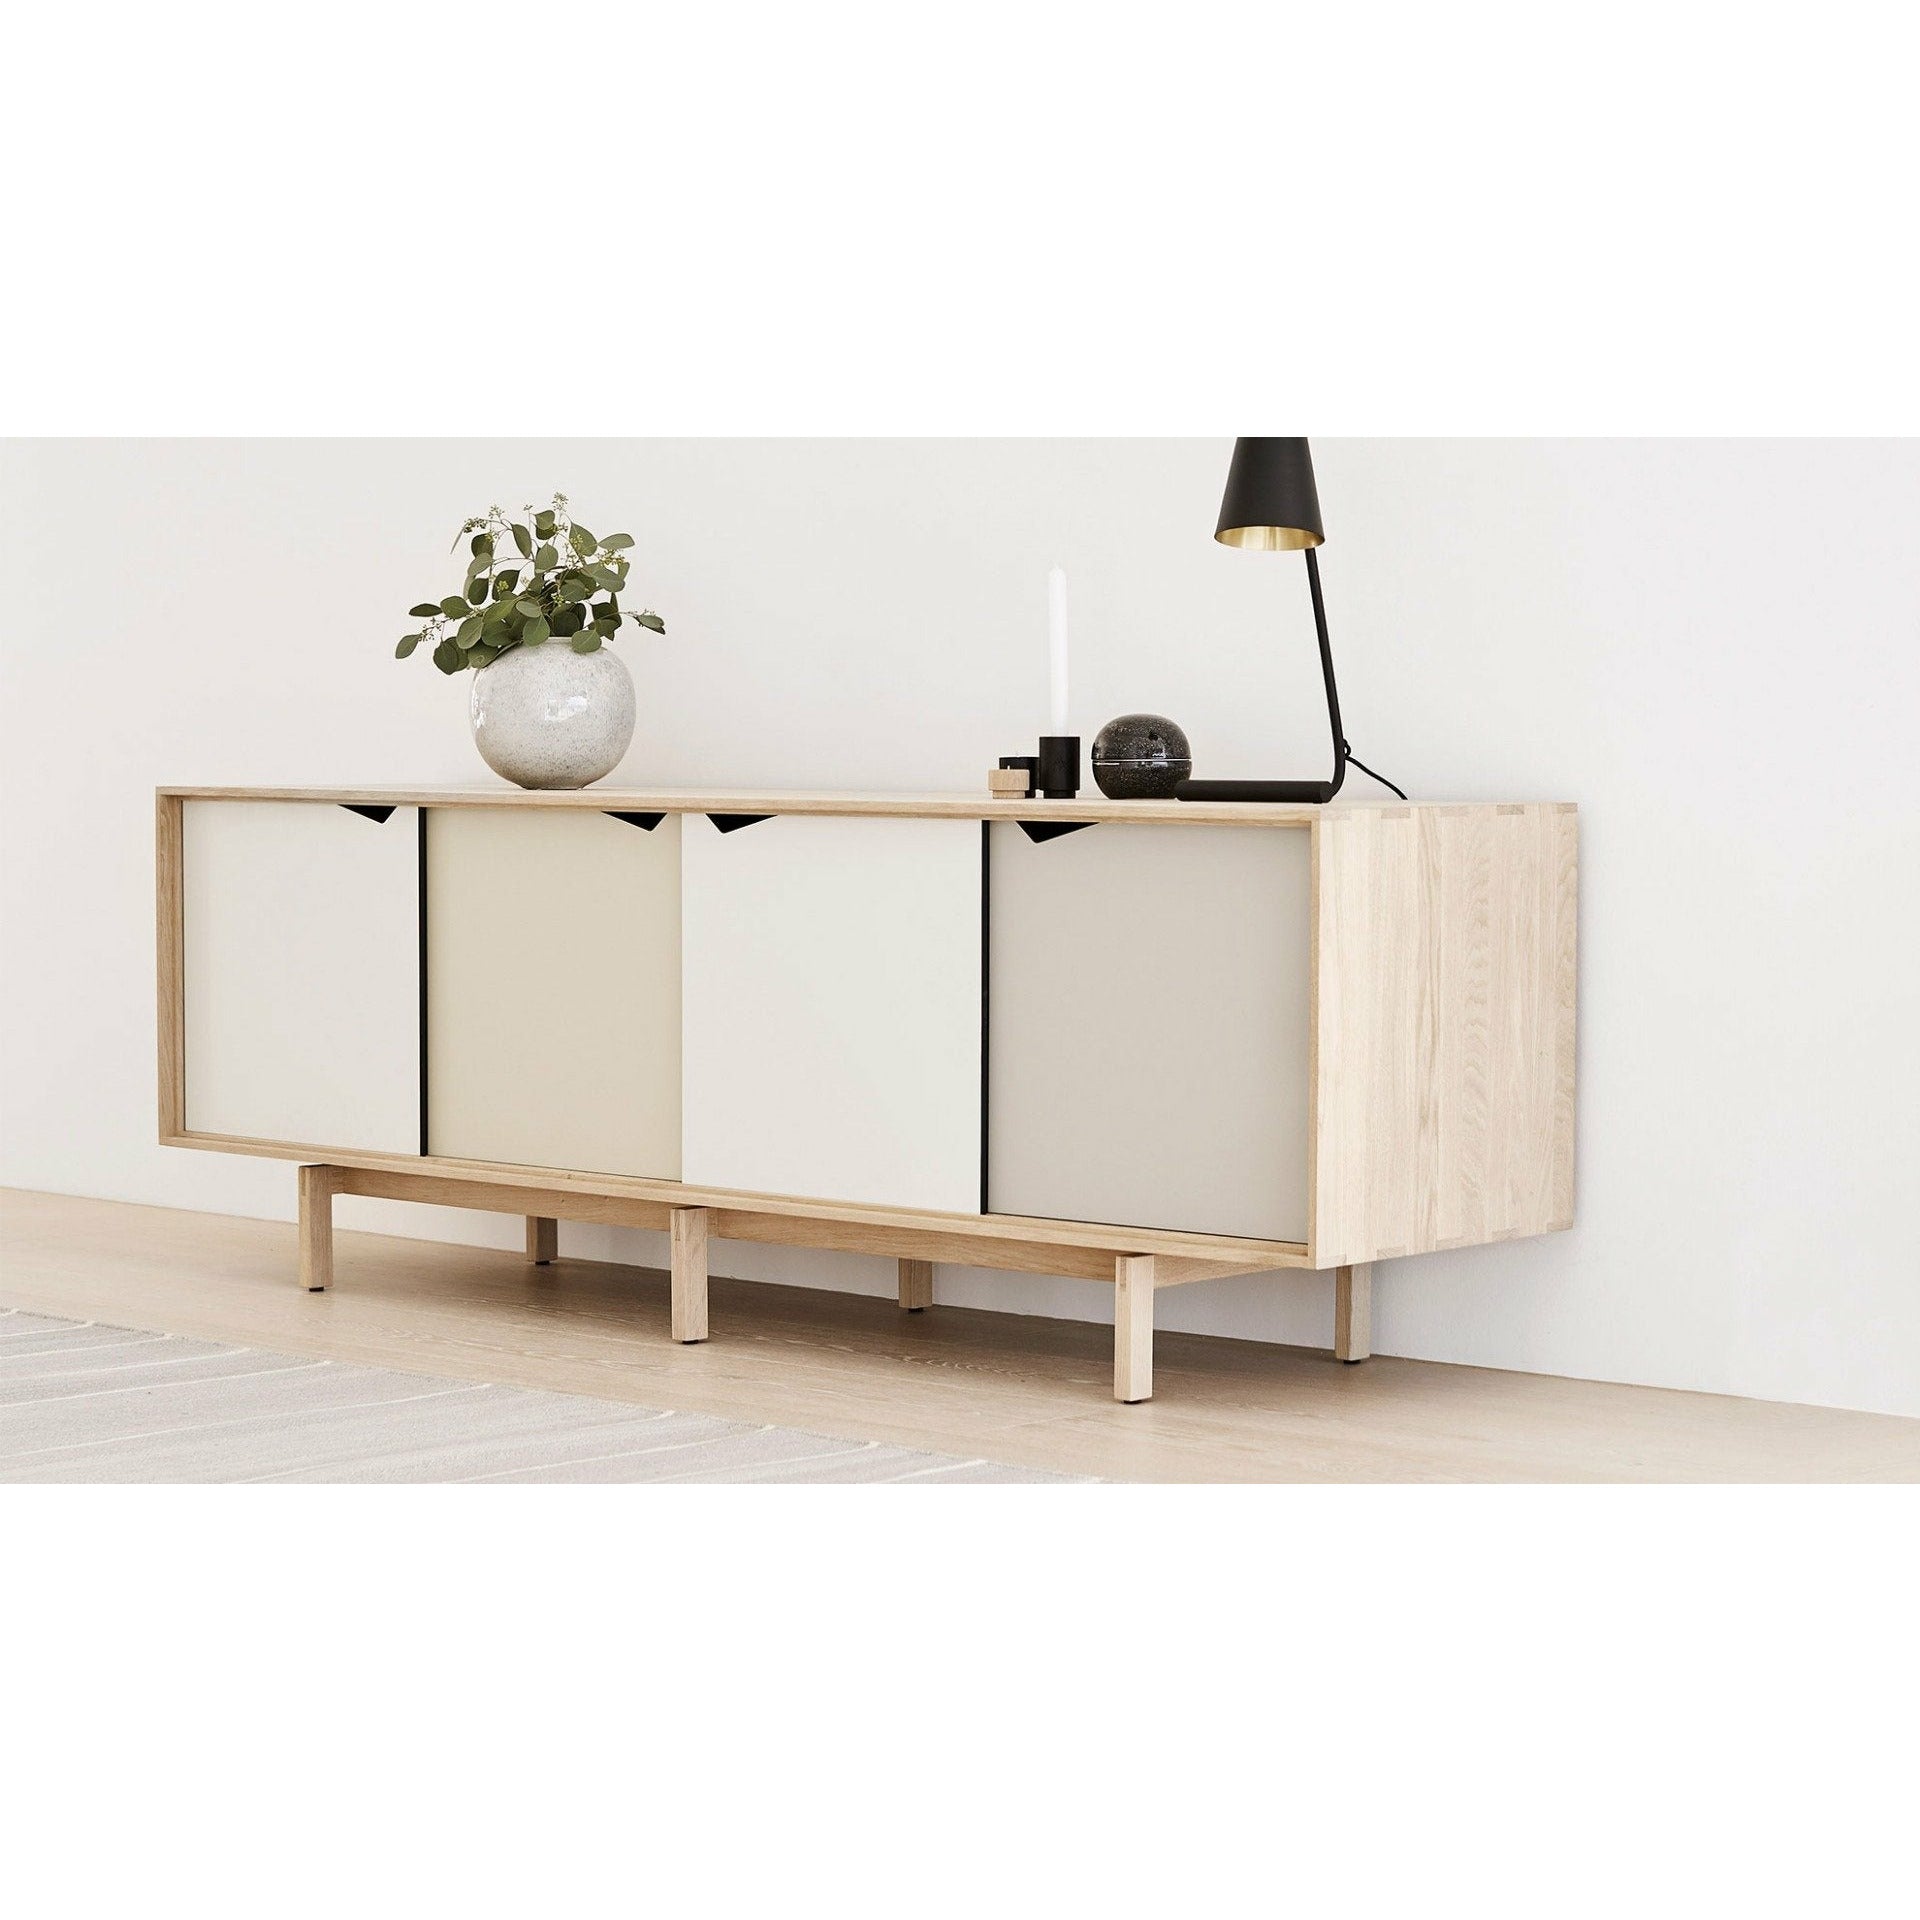 Andersen Furniture S1 skjenk såpe eik, flerfargede skuffer, 200 cm